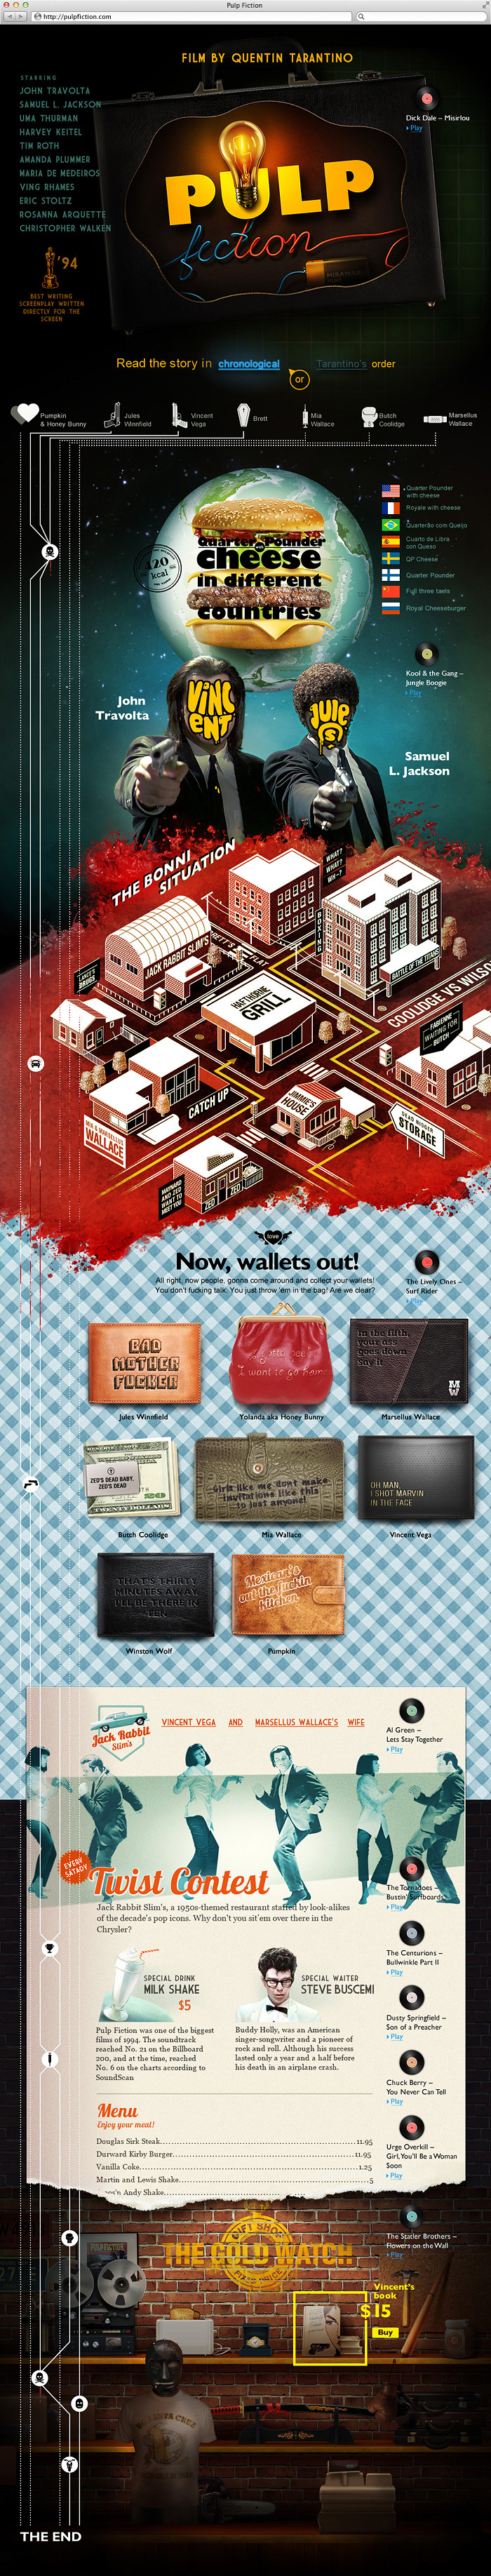 Tarantino pulp fiction game WALLET Cinema menu concept Cheeseburger Interface movie inglourious basterds timeline Gift Shop